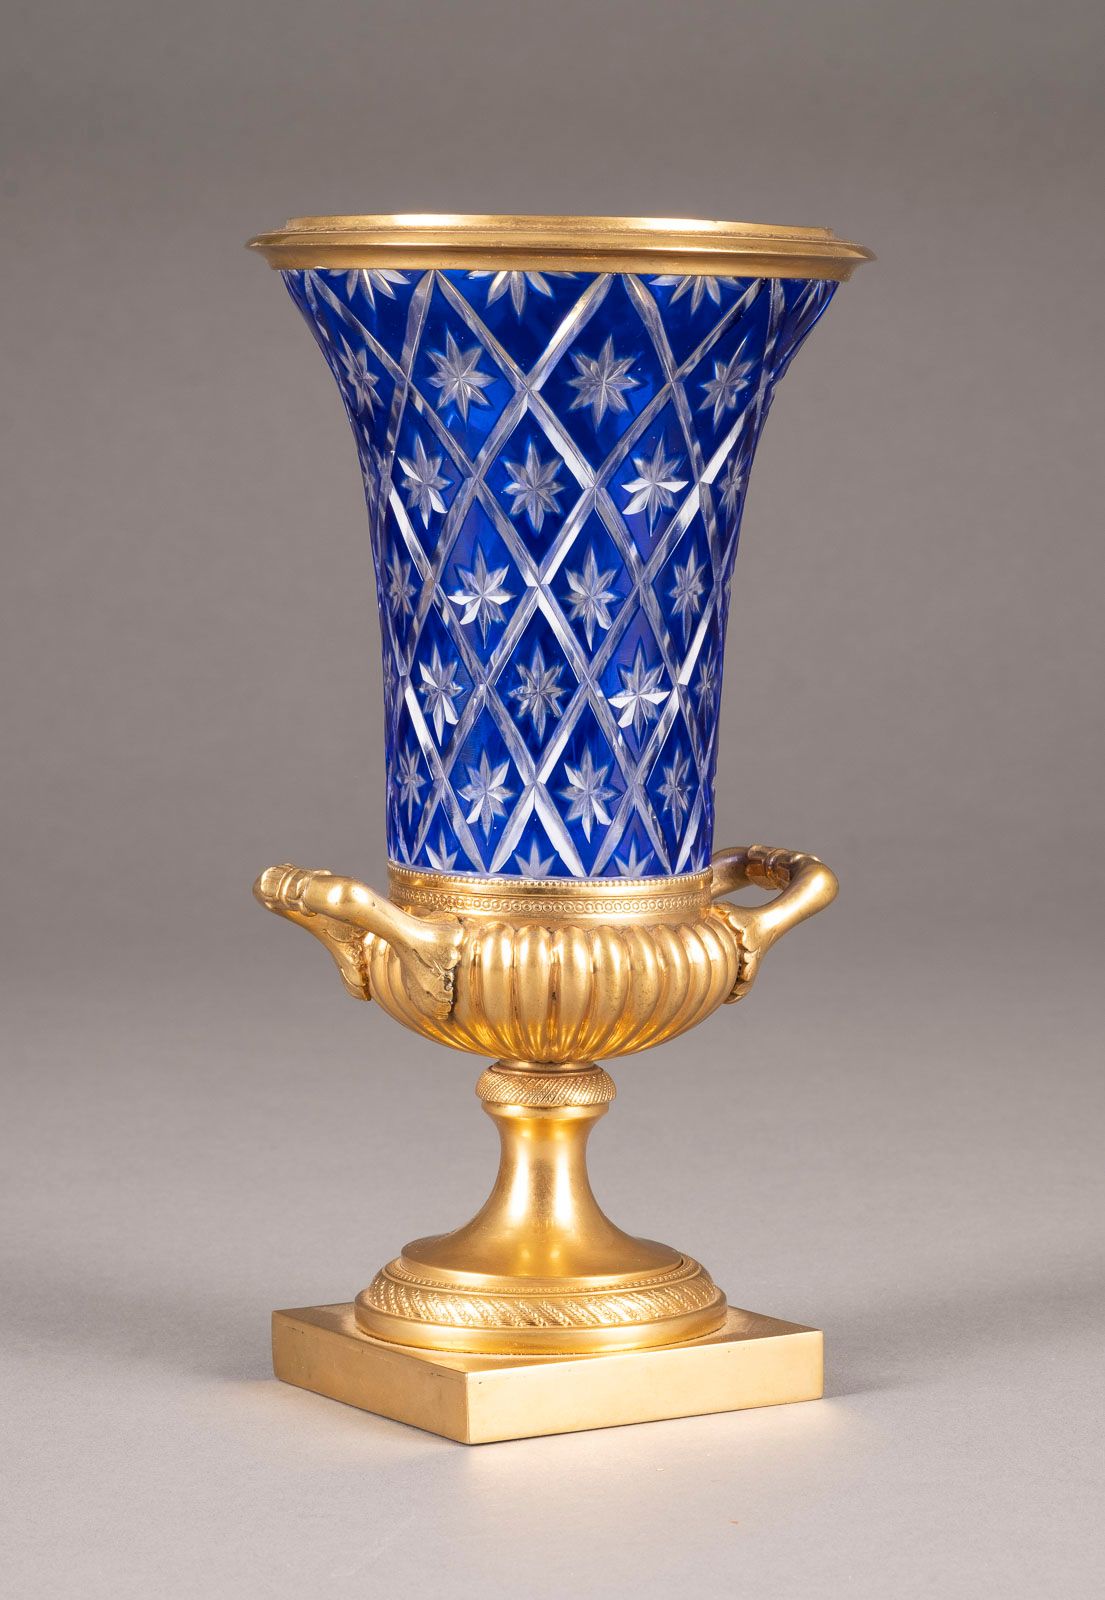 AN ORMOLU AND COBALT-BLUE CUT-GLASS VASE JARRON DE VIDRIO ORMOLU Y AZUL COBALTO &hellip;